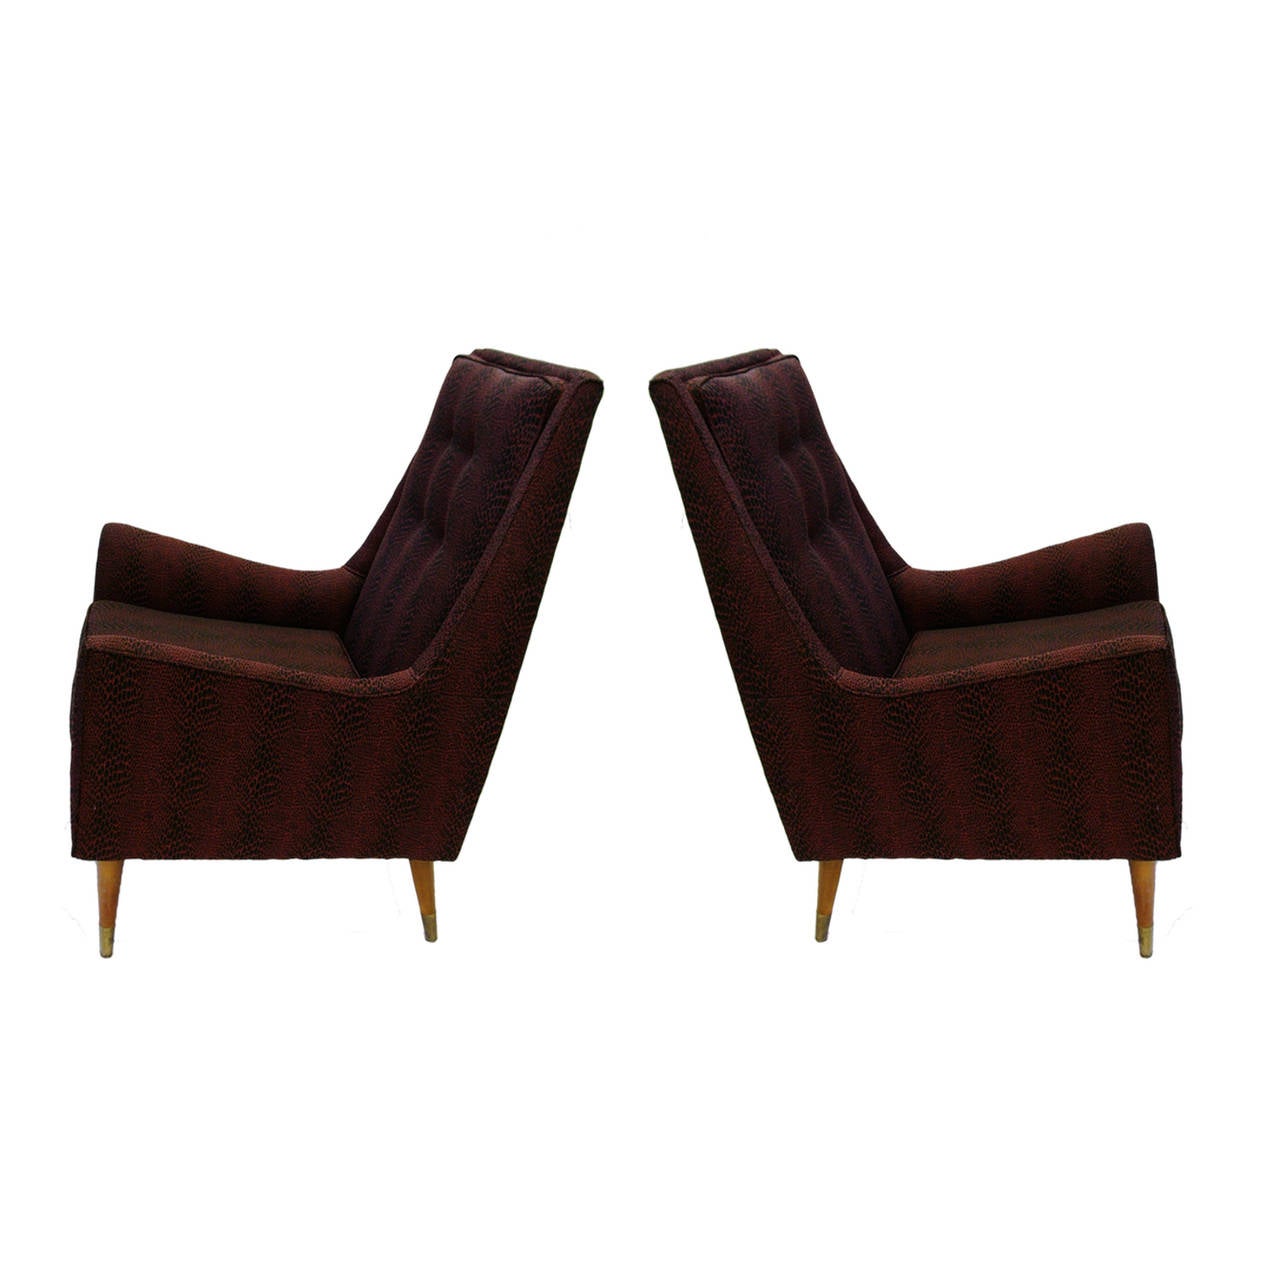 Brass Pair of Sleek Mid-Century Modern Milo Baughman Chairs in Python Print